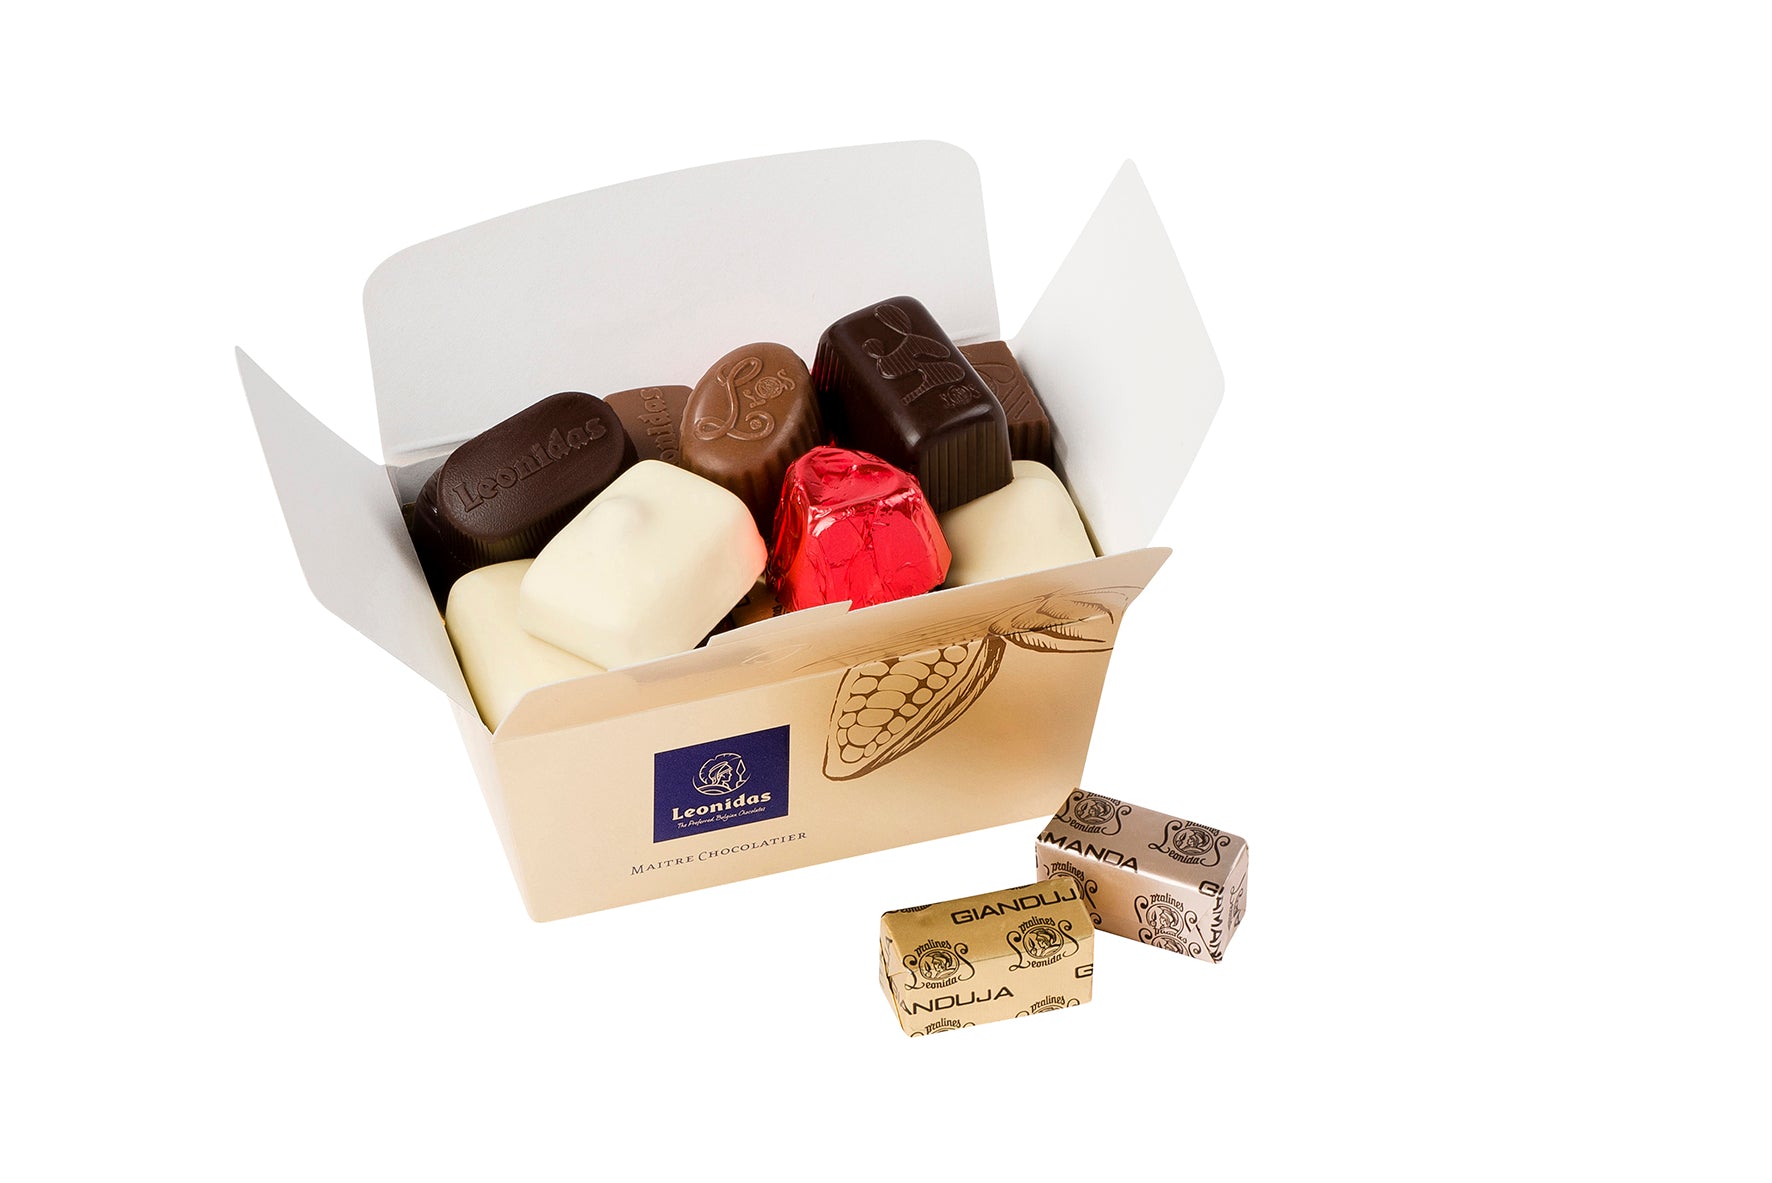 Leonidas chocolat belge Mélange 300 gr - boutique en ligne